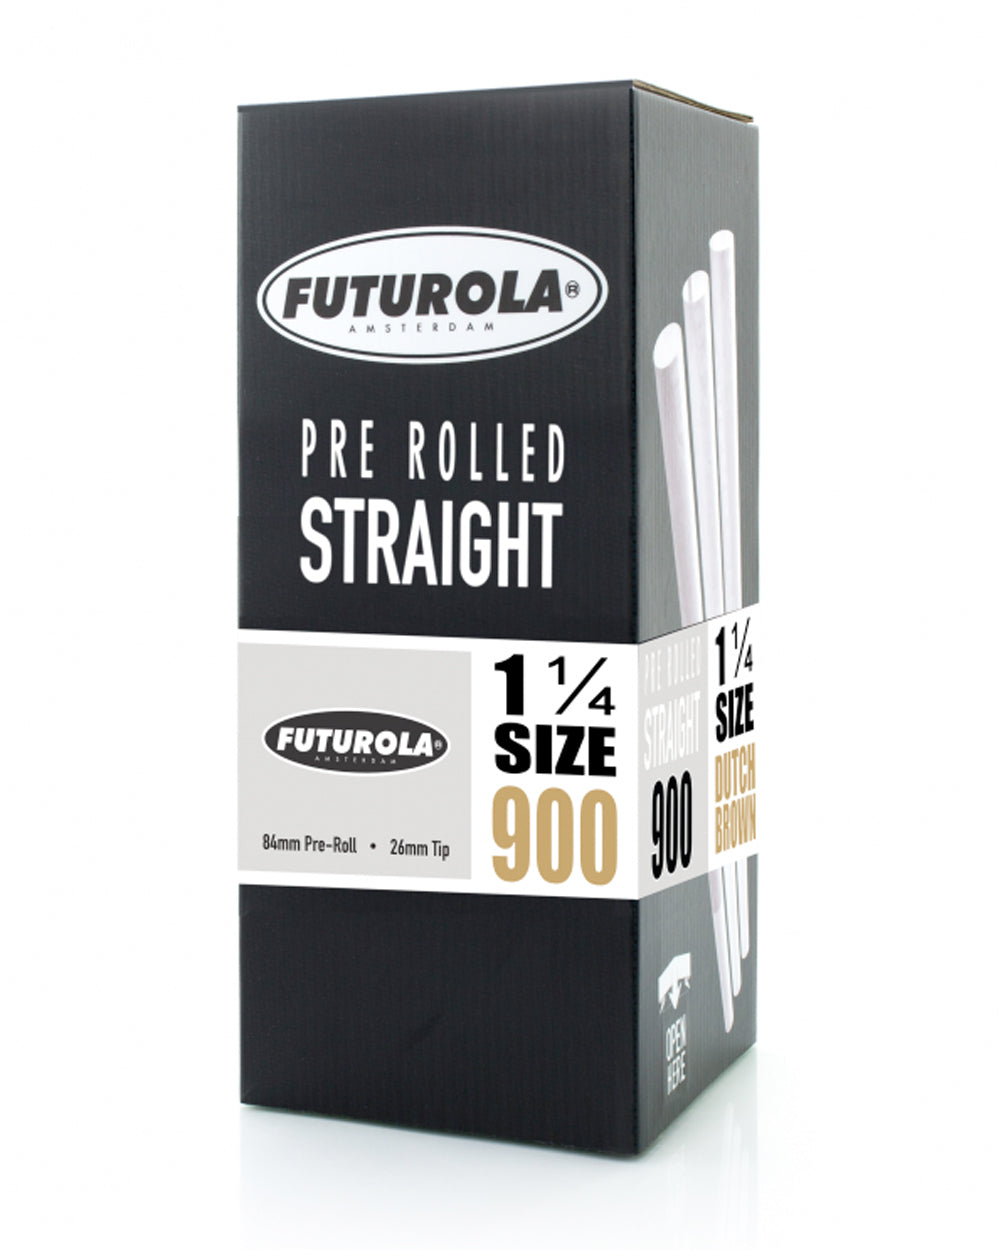 FUTUROLA | Straight 1 1/4 Size Pre-Rolled Cones | 84mm - Dutch Brown Paper - 900 Count - 1